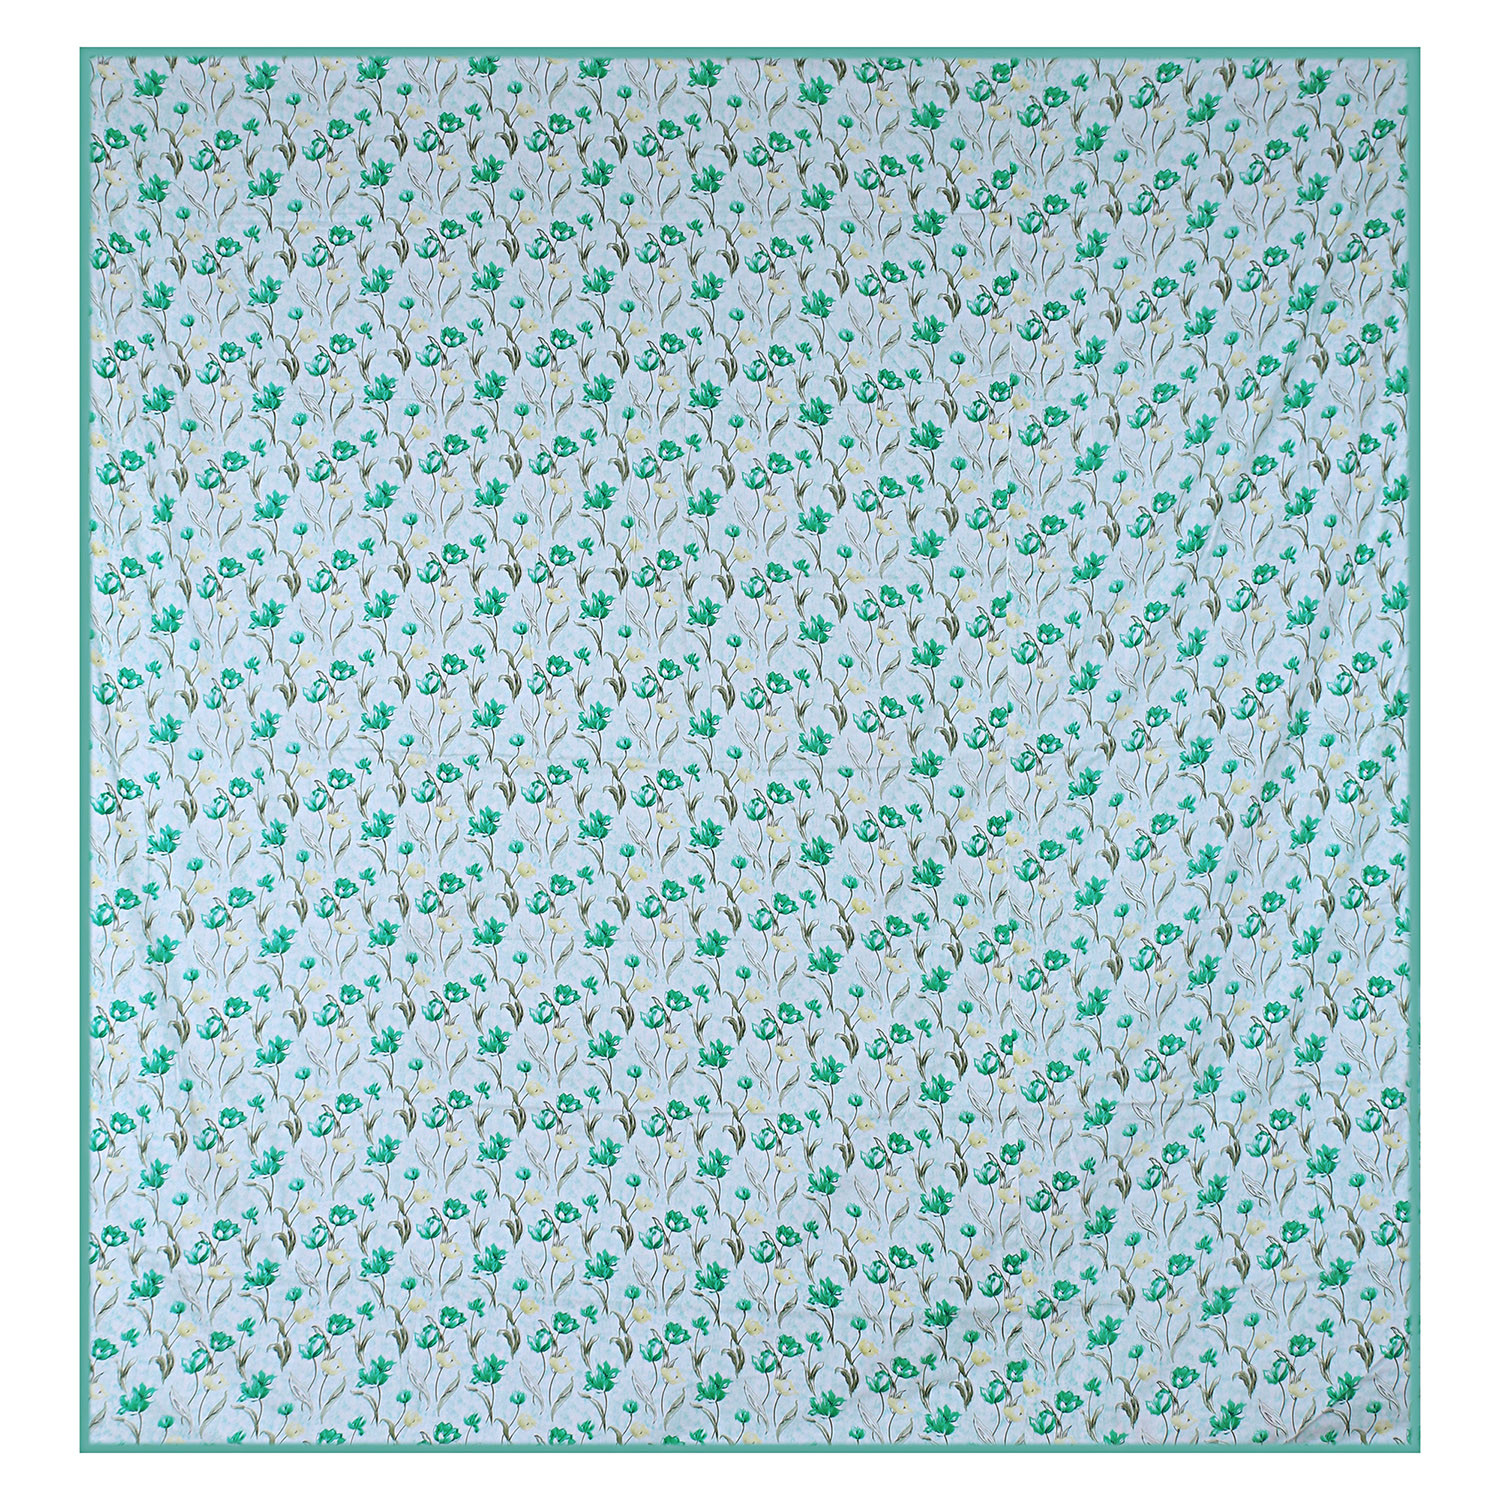 Kuber Industries Cotton Soft Lightweight Floral Design Reversible Single Bed Dohar | Blanket | AC Quilt for Home & Travel (Green)